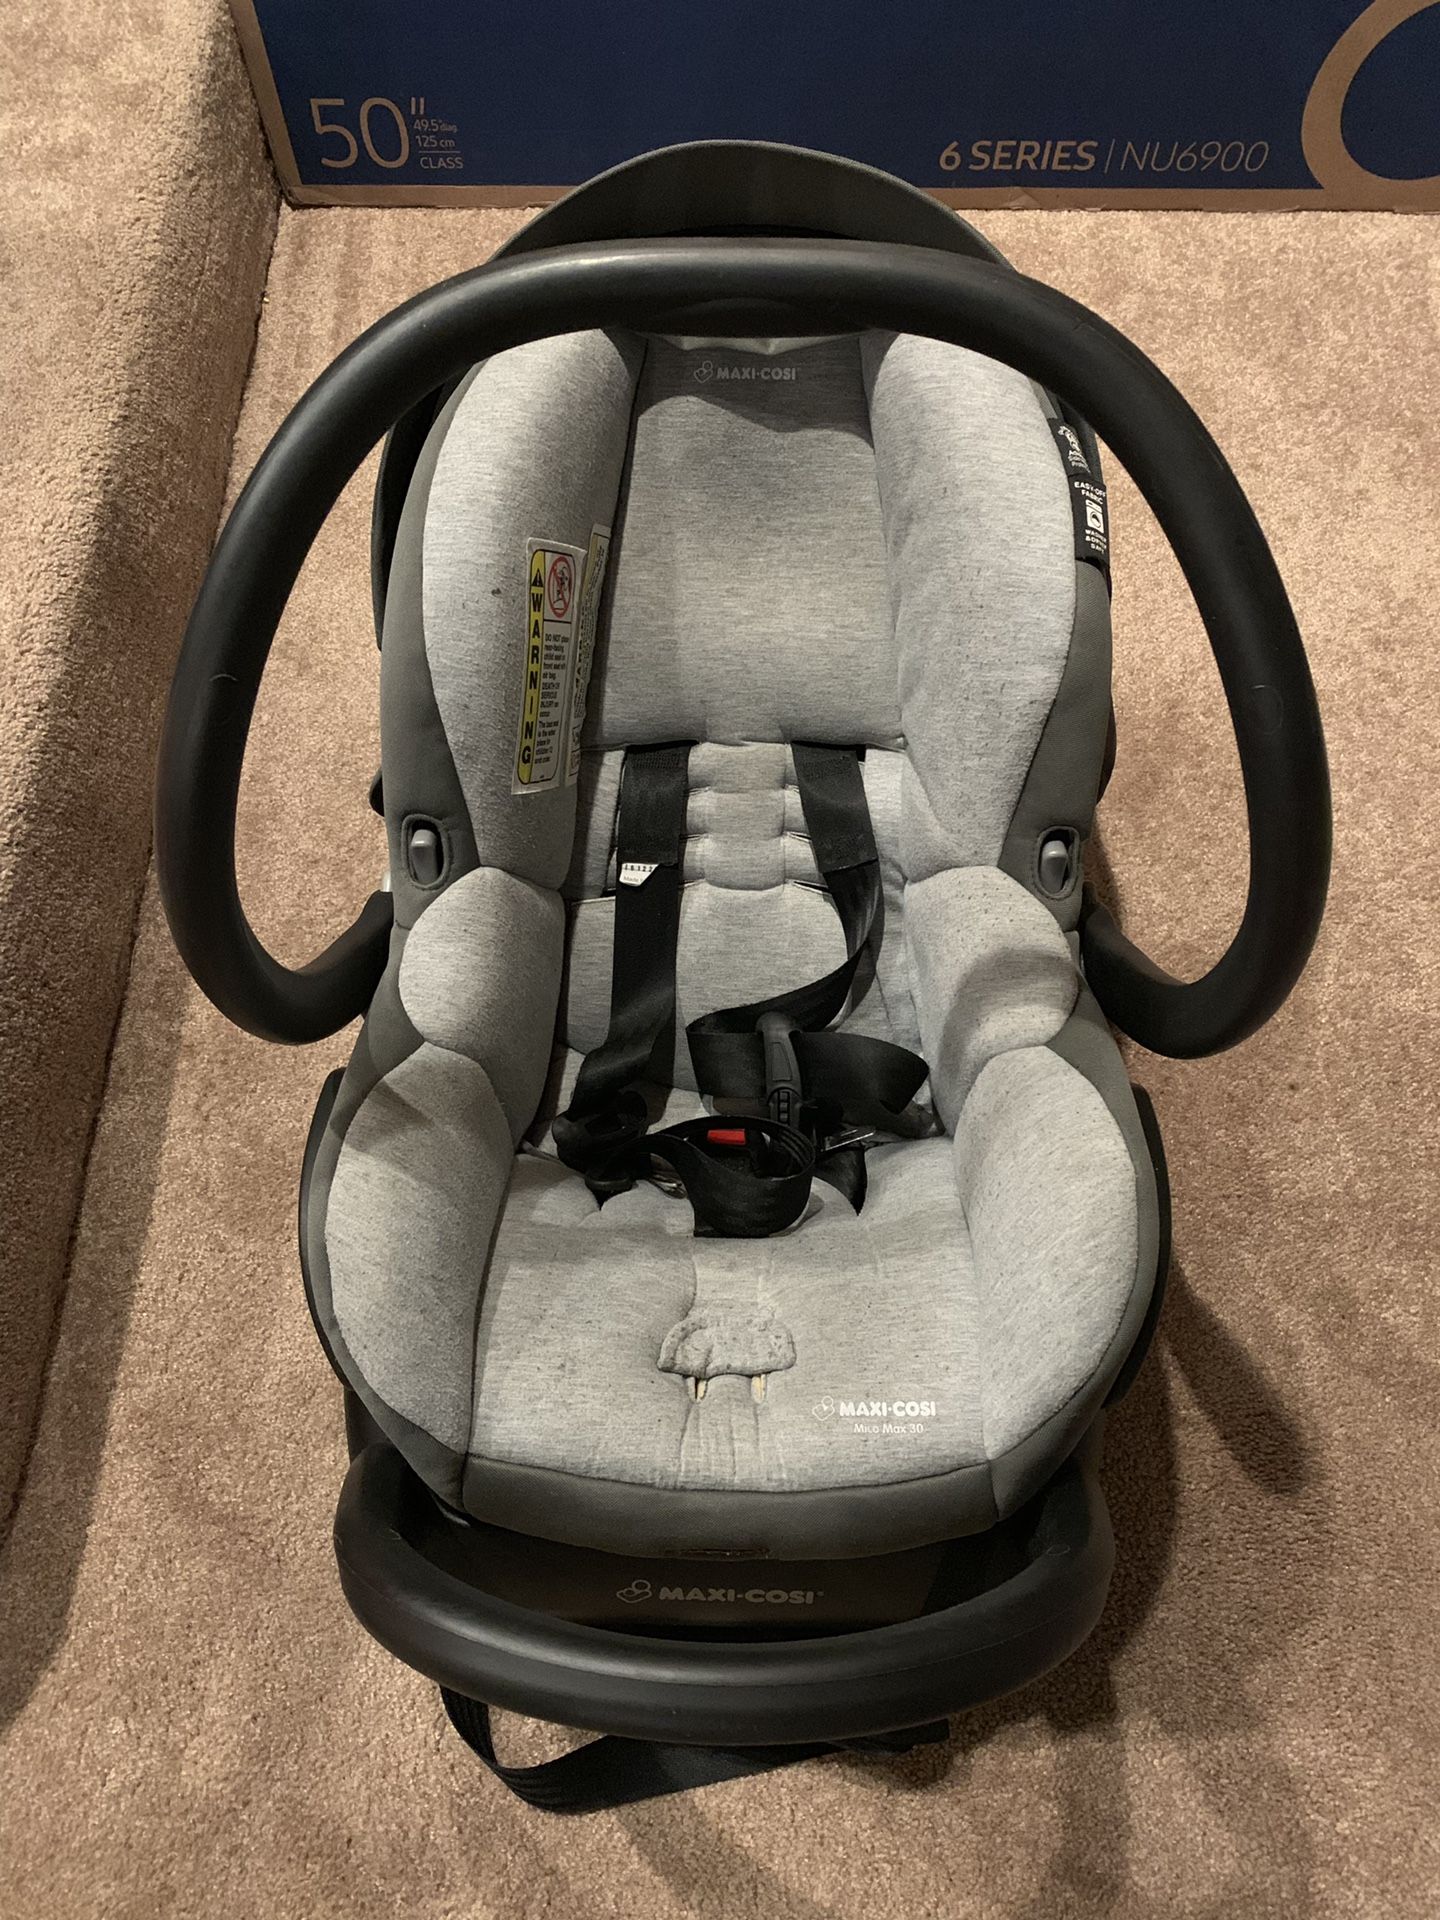 Maxi-cosi Adorra Modular 5 in 1 Travel System with Mico Max 30 Infant Car Seat,Loyal Grey